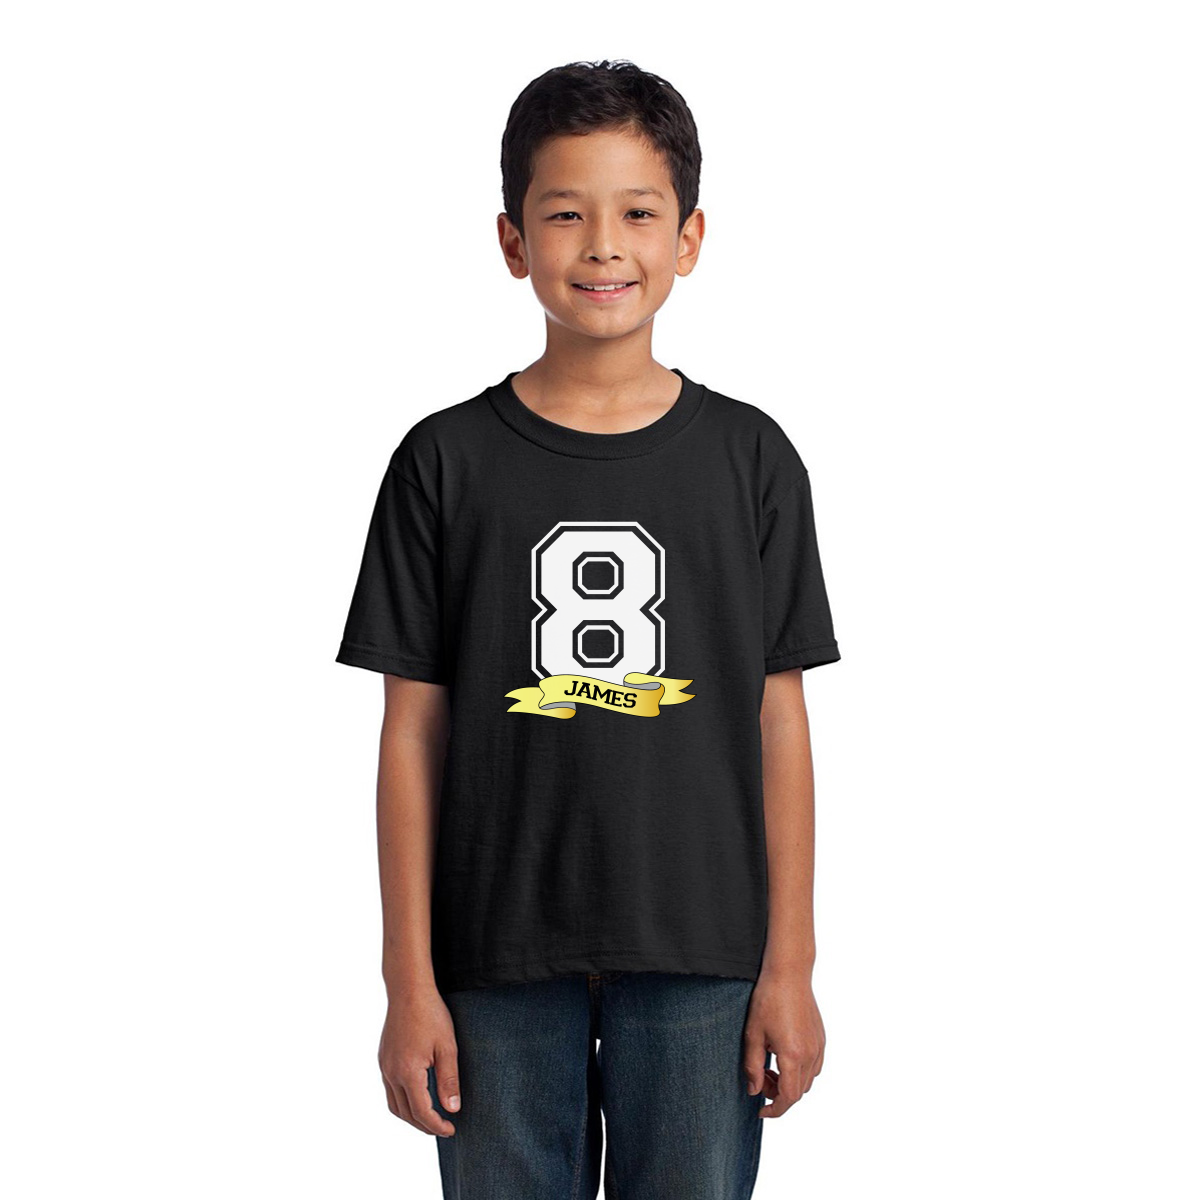 Eighth Birthday Kids T-shirt | Black